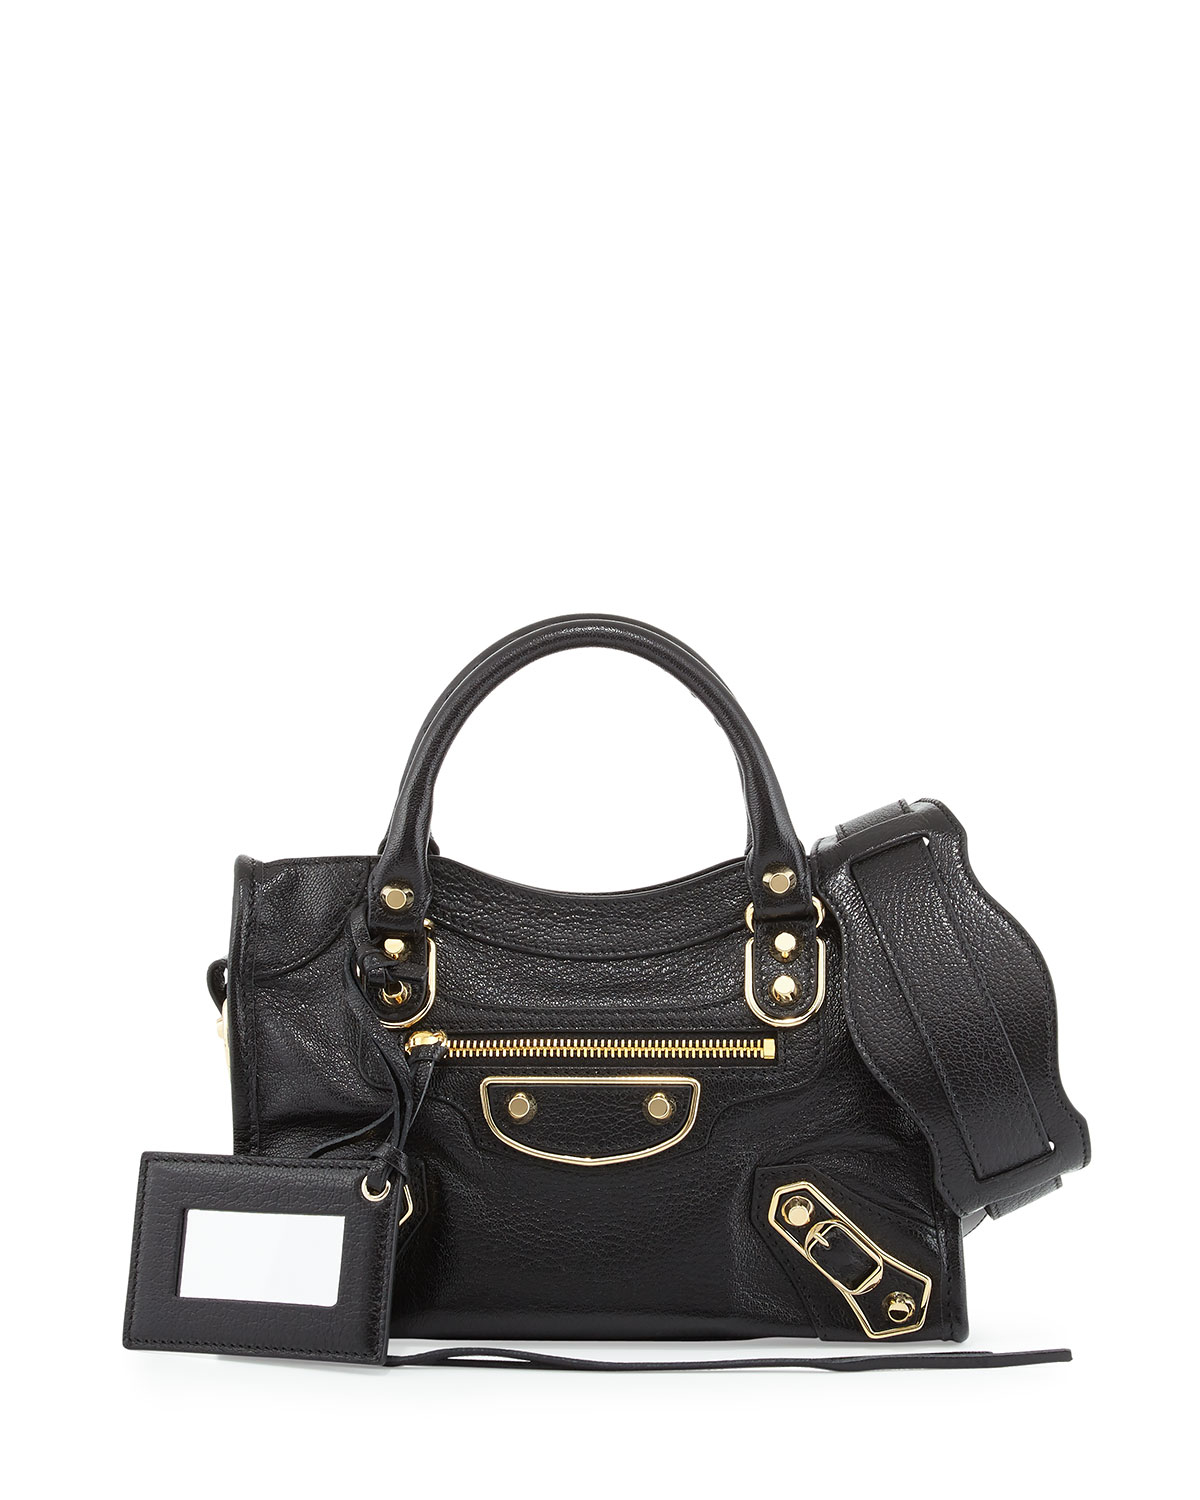 Balenciaga Metallic Edge City Mini Bag in Black | Lyst